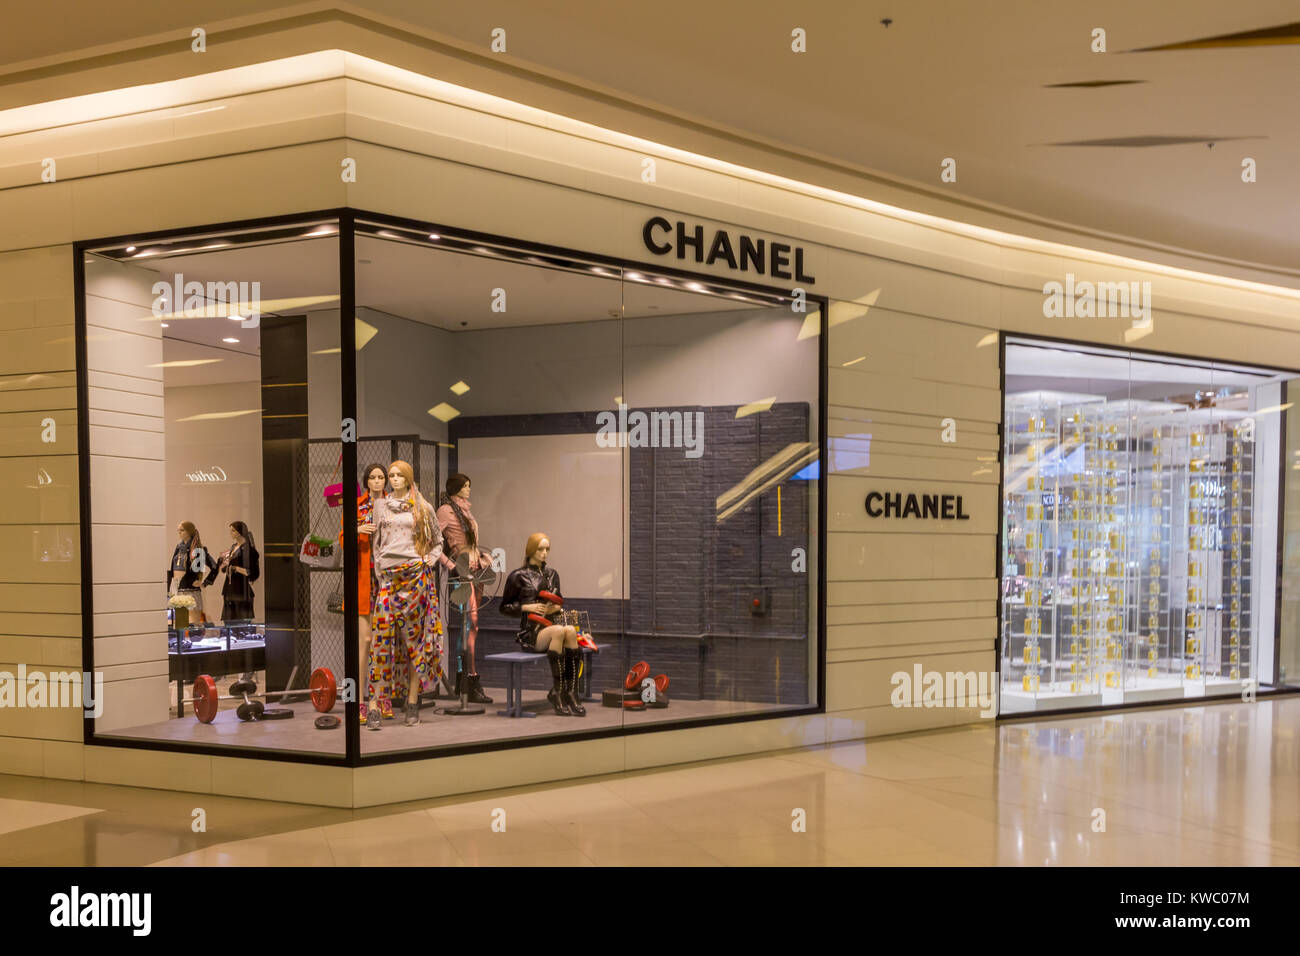 Chanel in Siam Paragon Bangkok, Thailand Photo Alamy